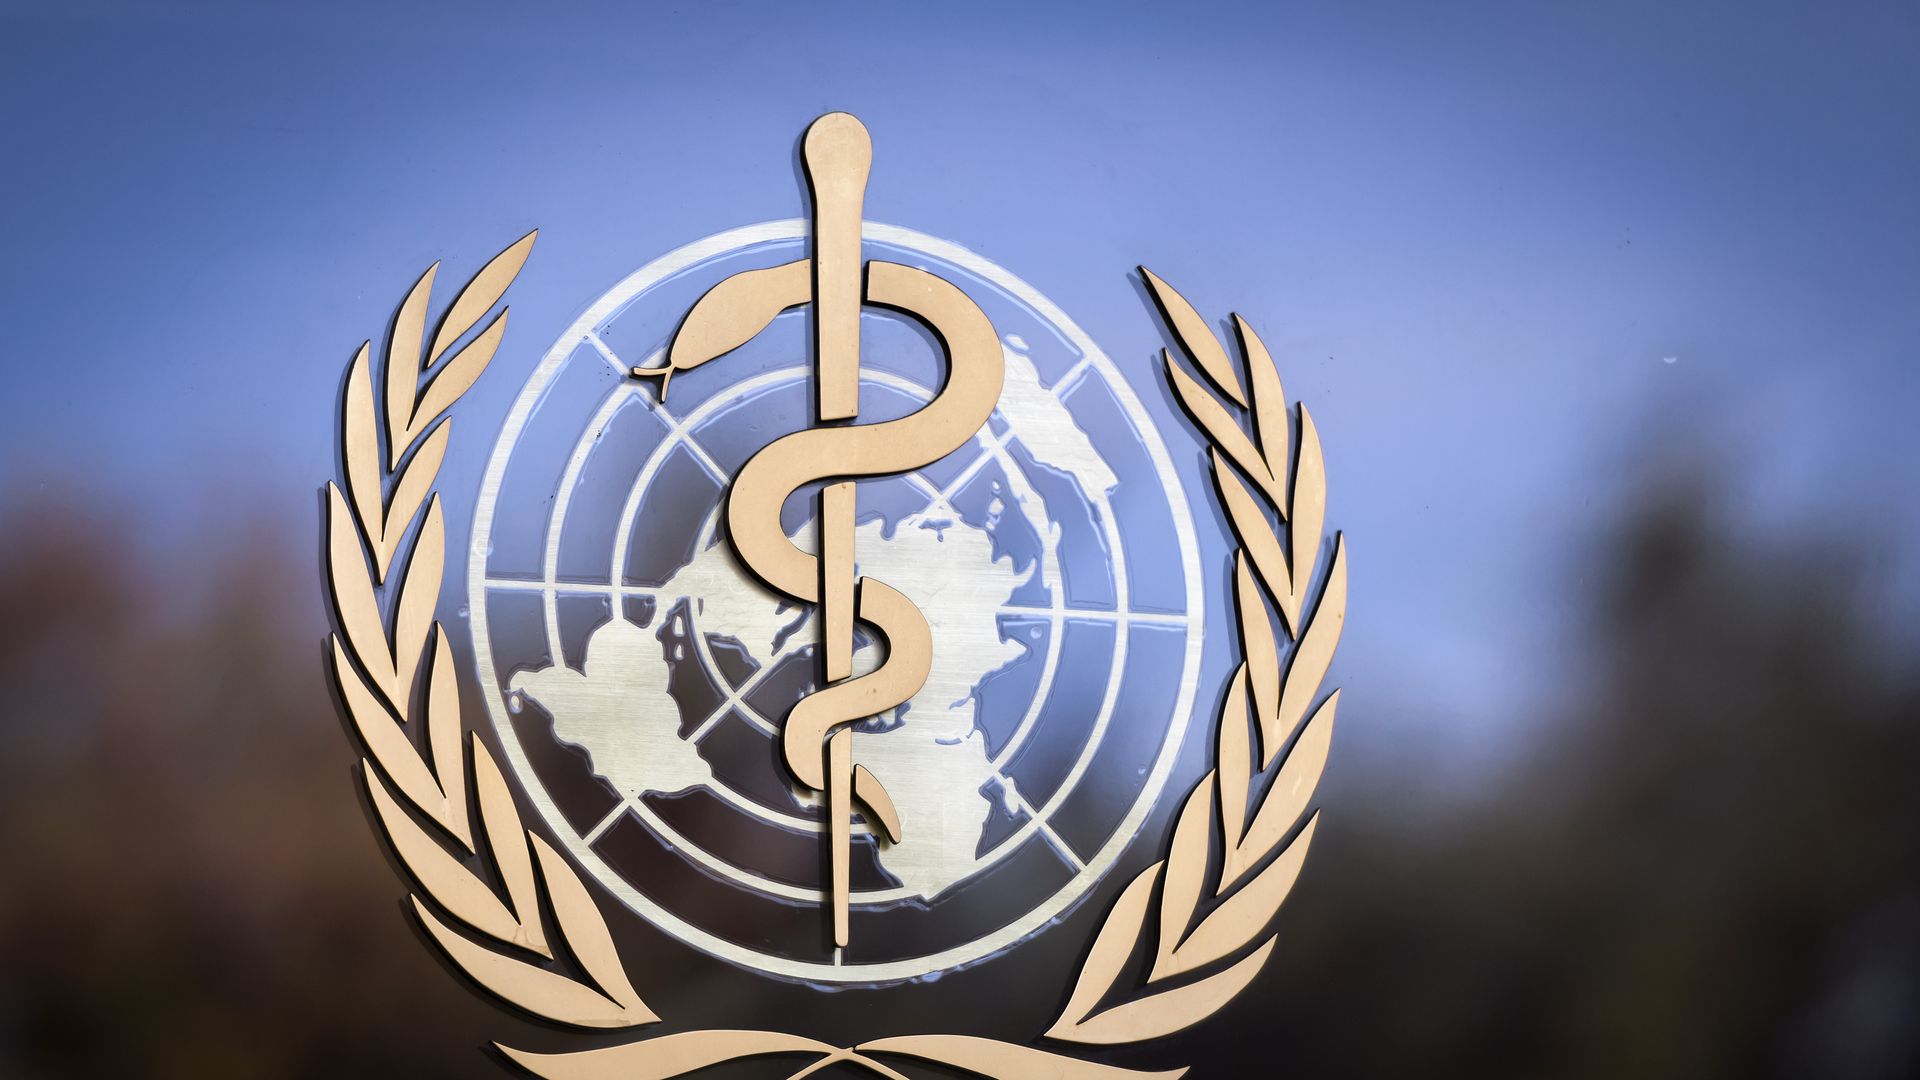 Photo of the World Health Organization emblem